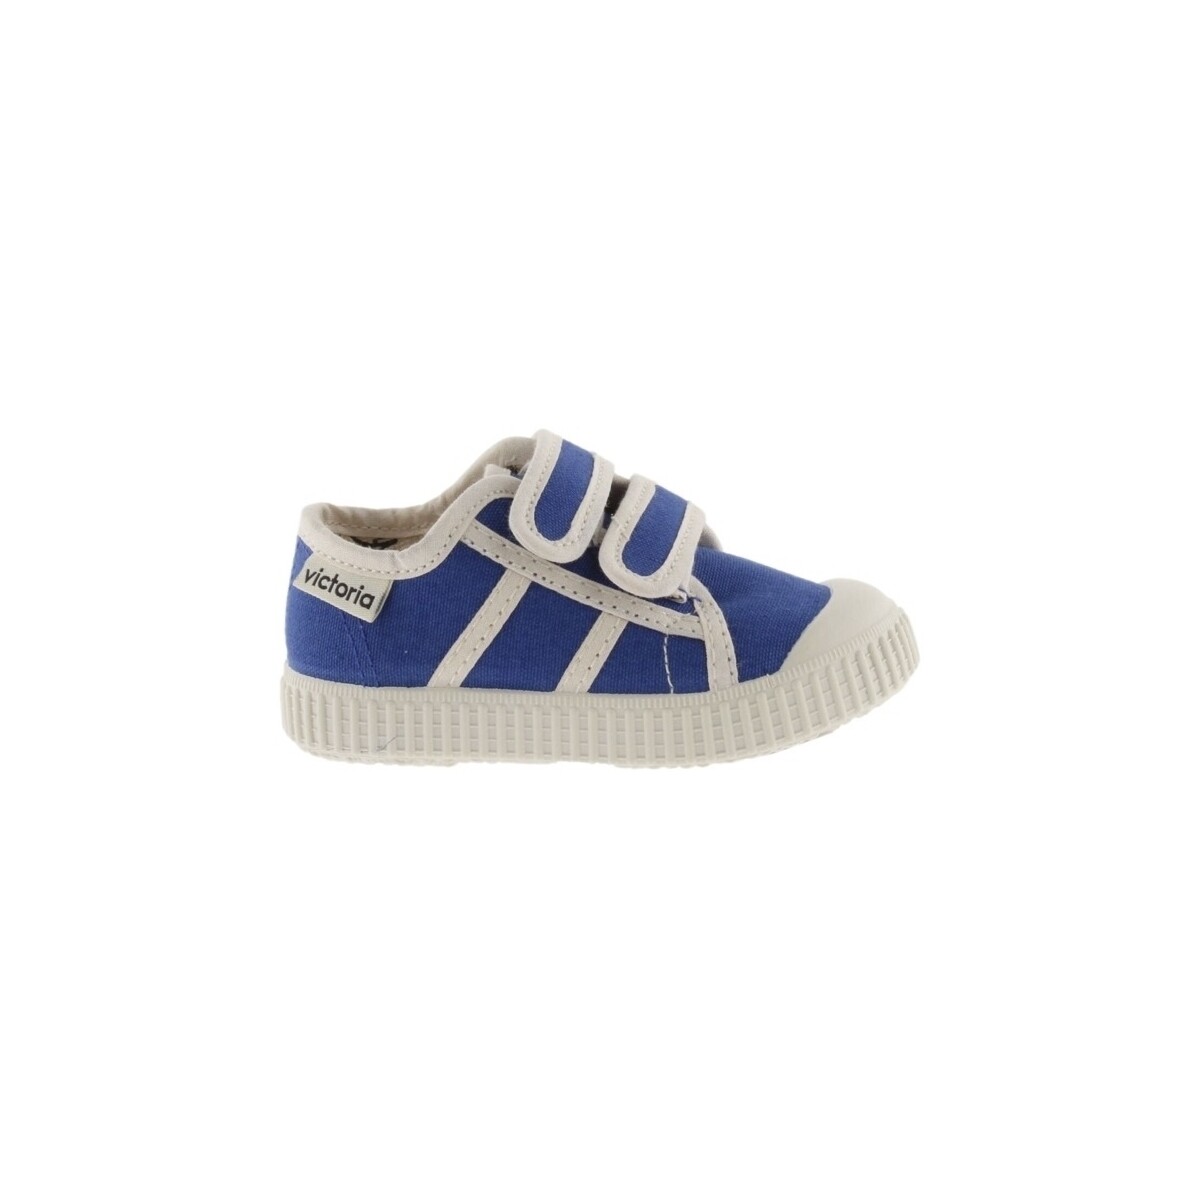 Sneakers Victoria Baby 366156 – Azul